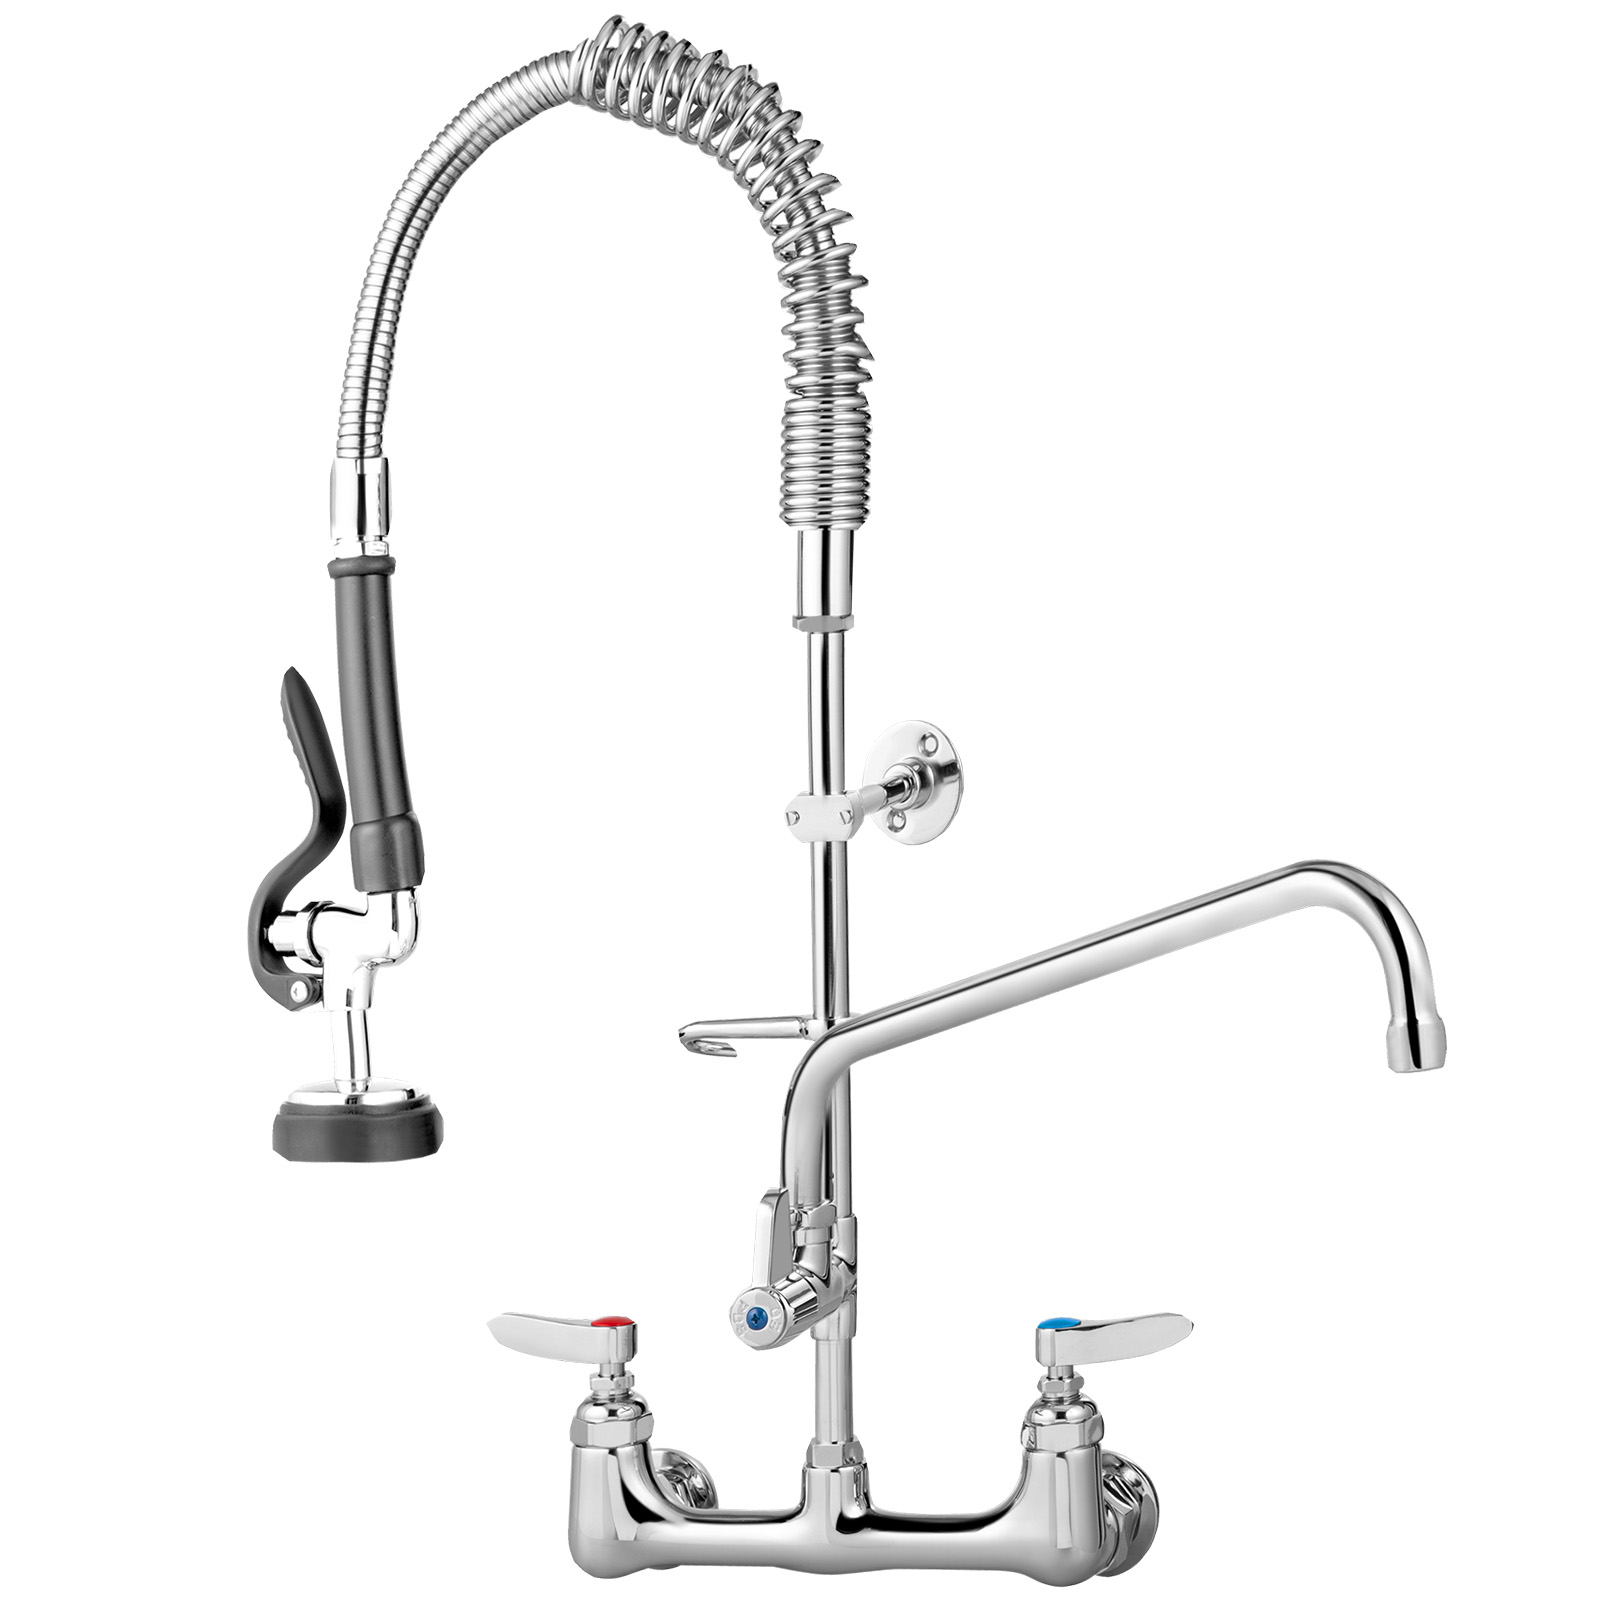 Pre-Rinse Spray Valve for Restaurant Kitchen Faucet Sink Faucet Spray Head USA 